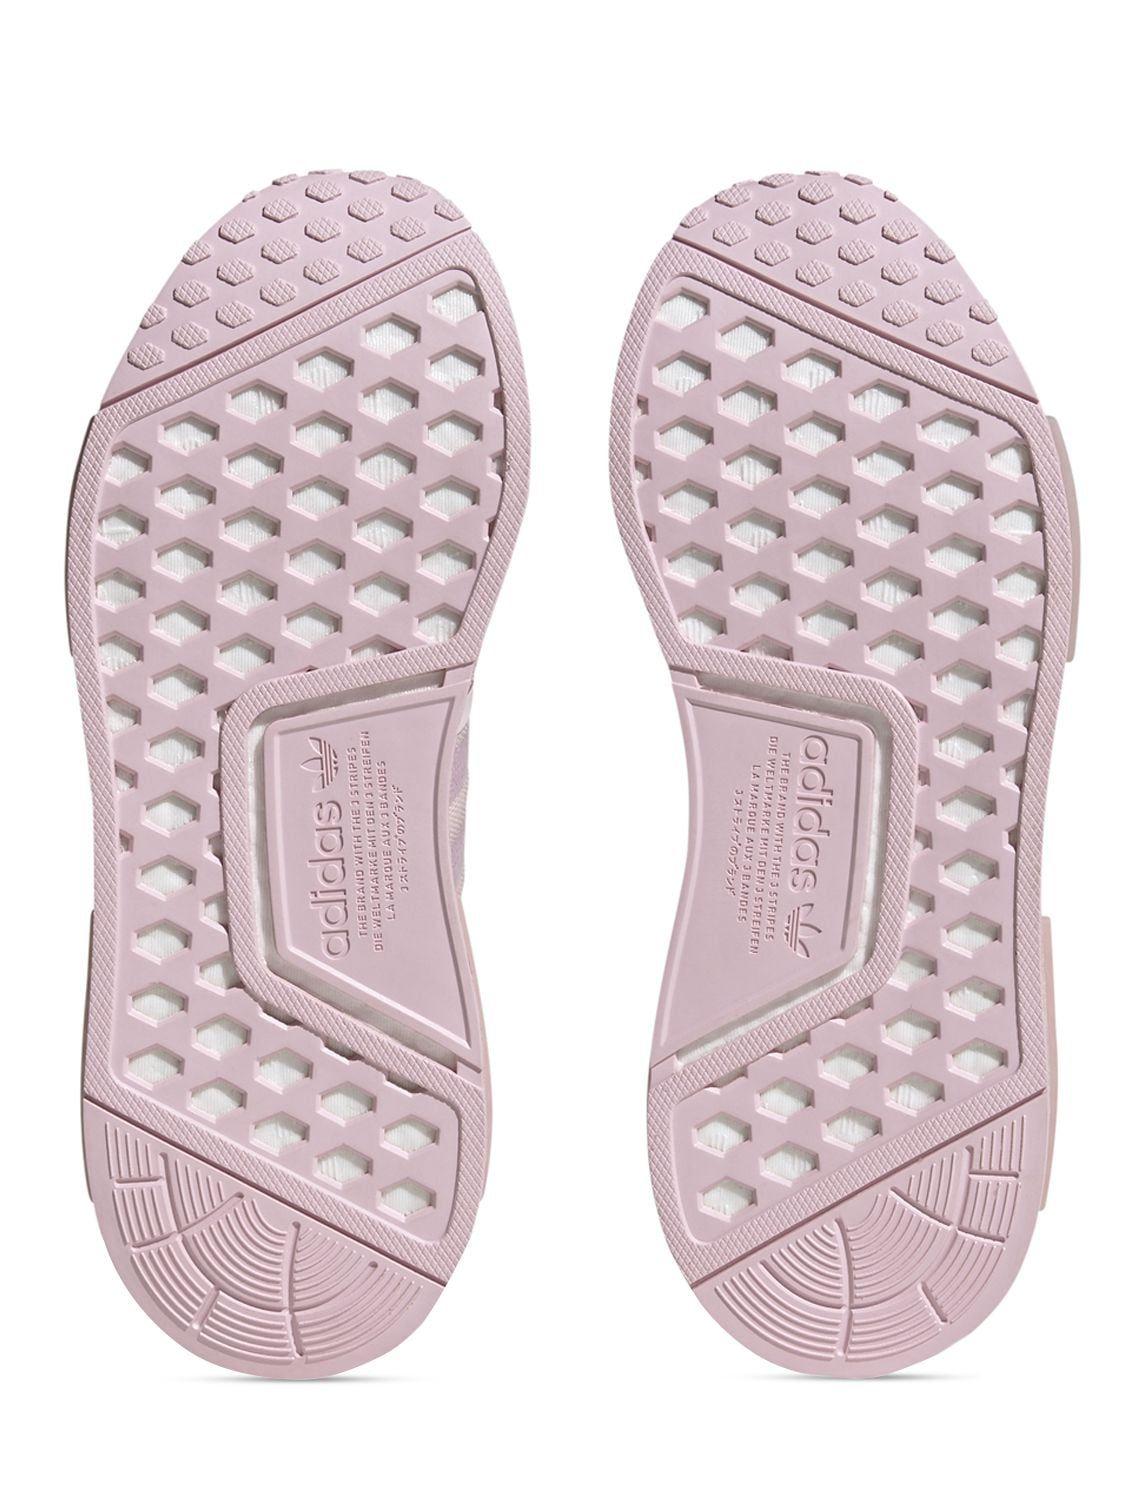 adidas Originals Nmd R1 Sneakers in Pink | Lyst